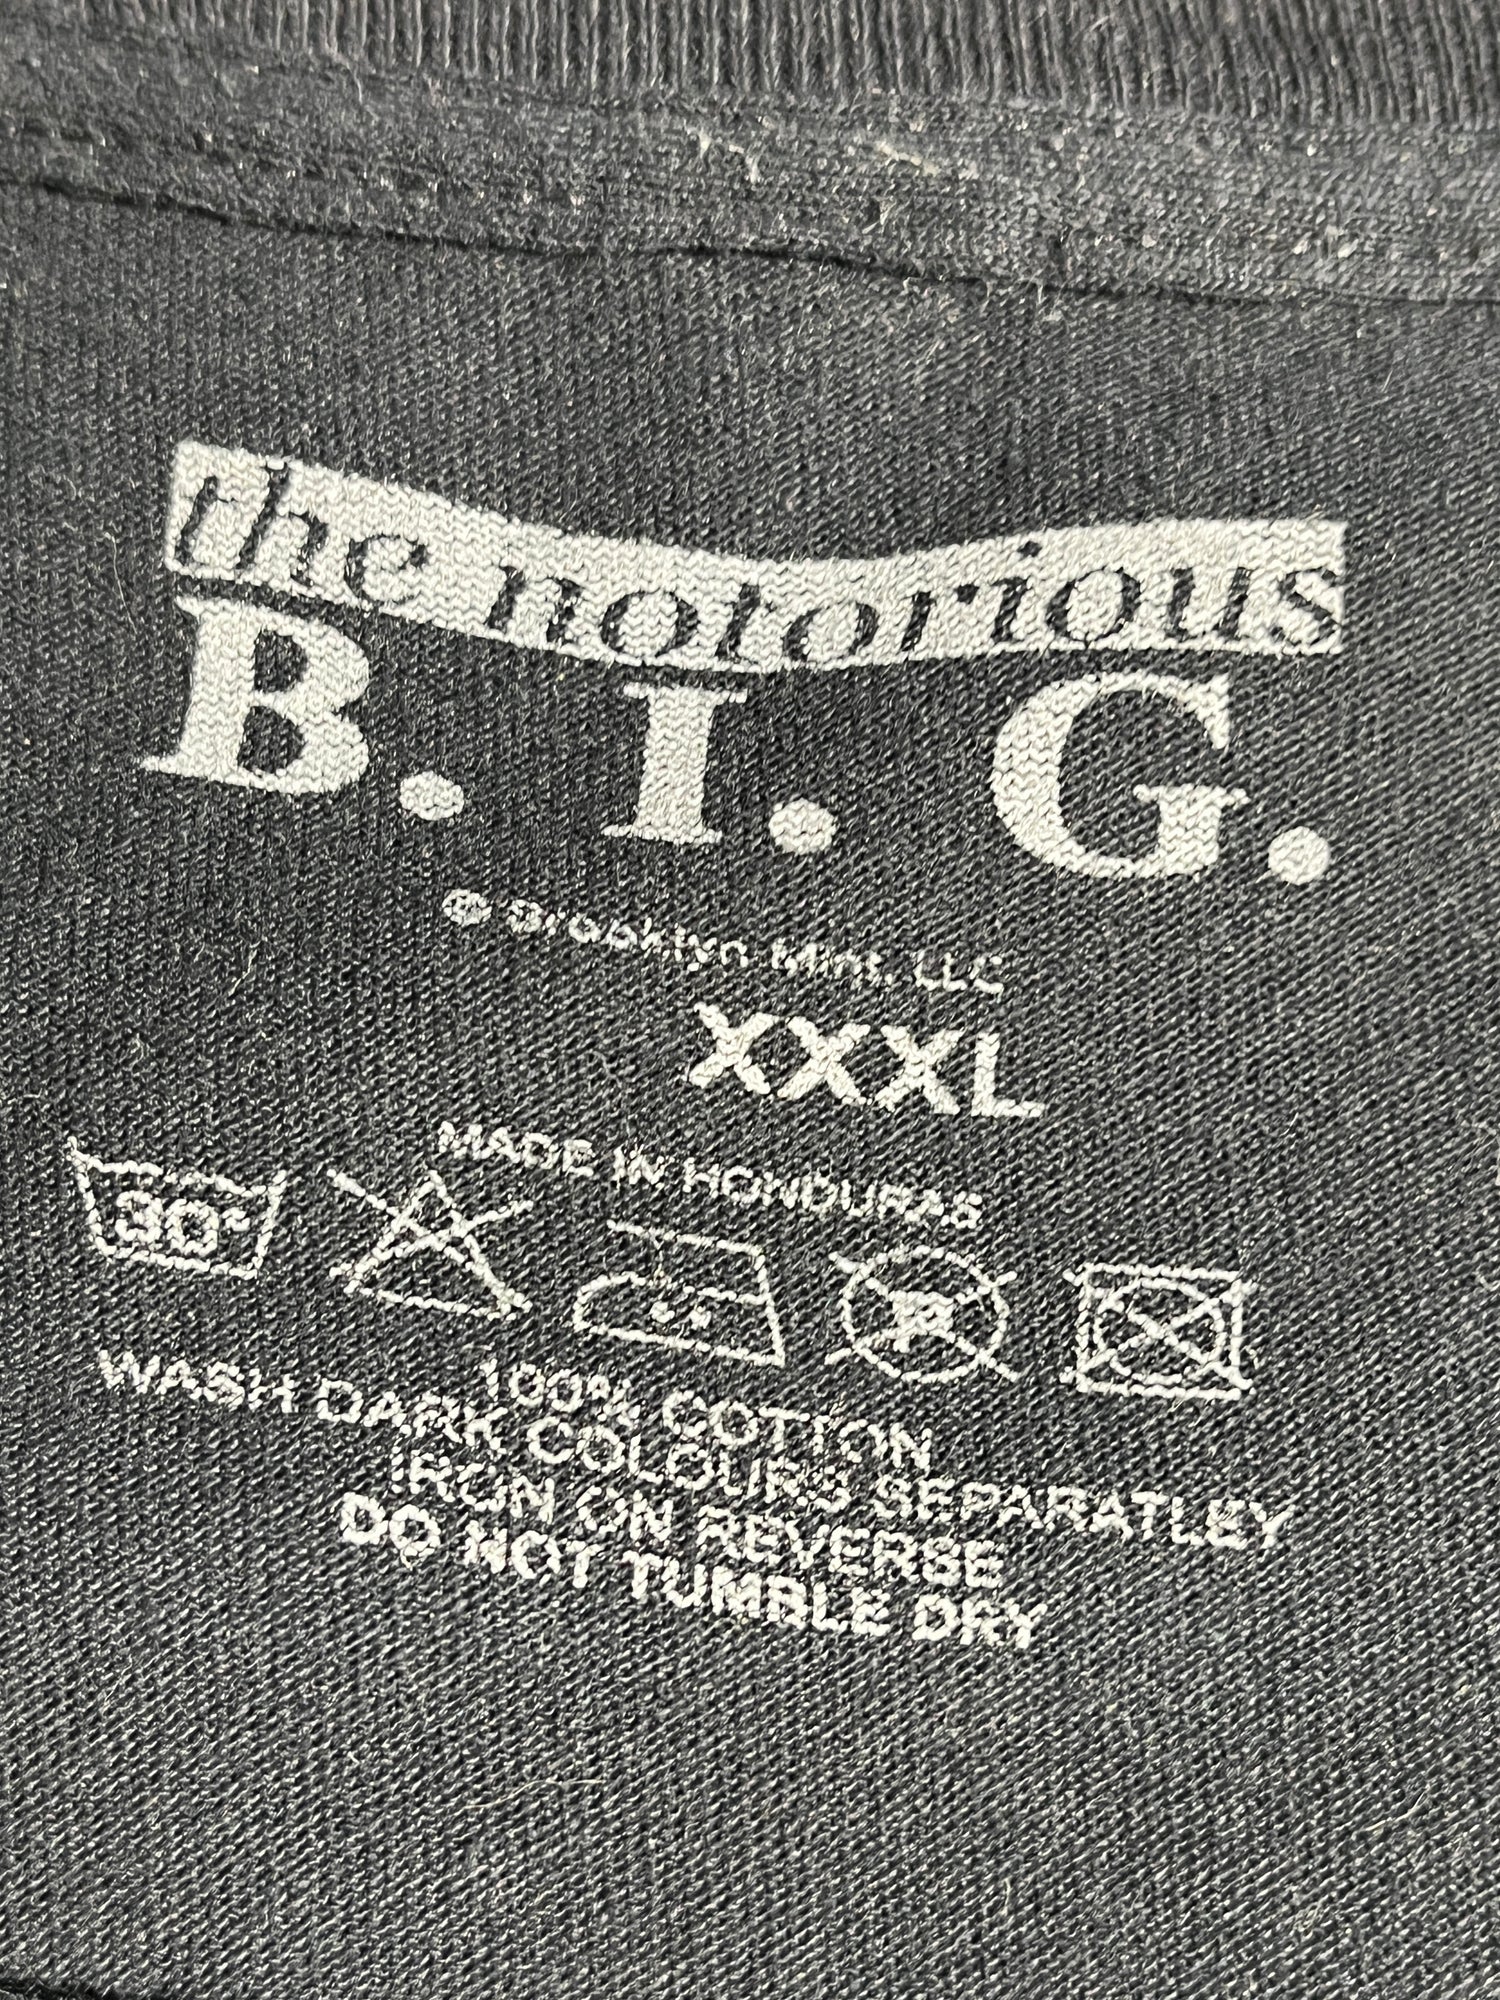 Vintage Notorious BIG T Shirt Biggie Smalls Lyrics Dice Rap Tee